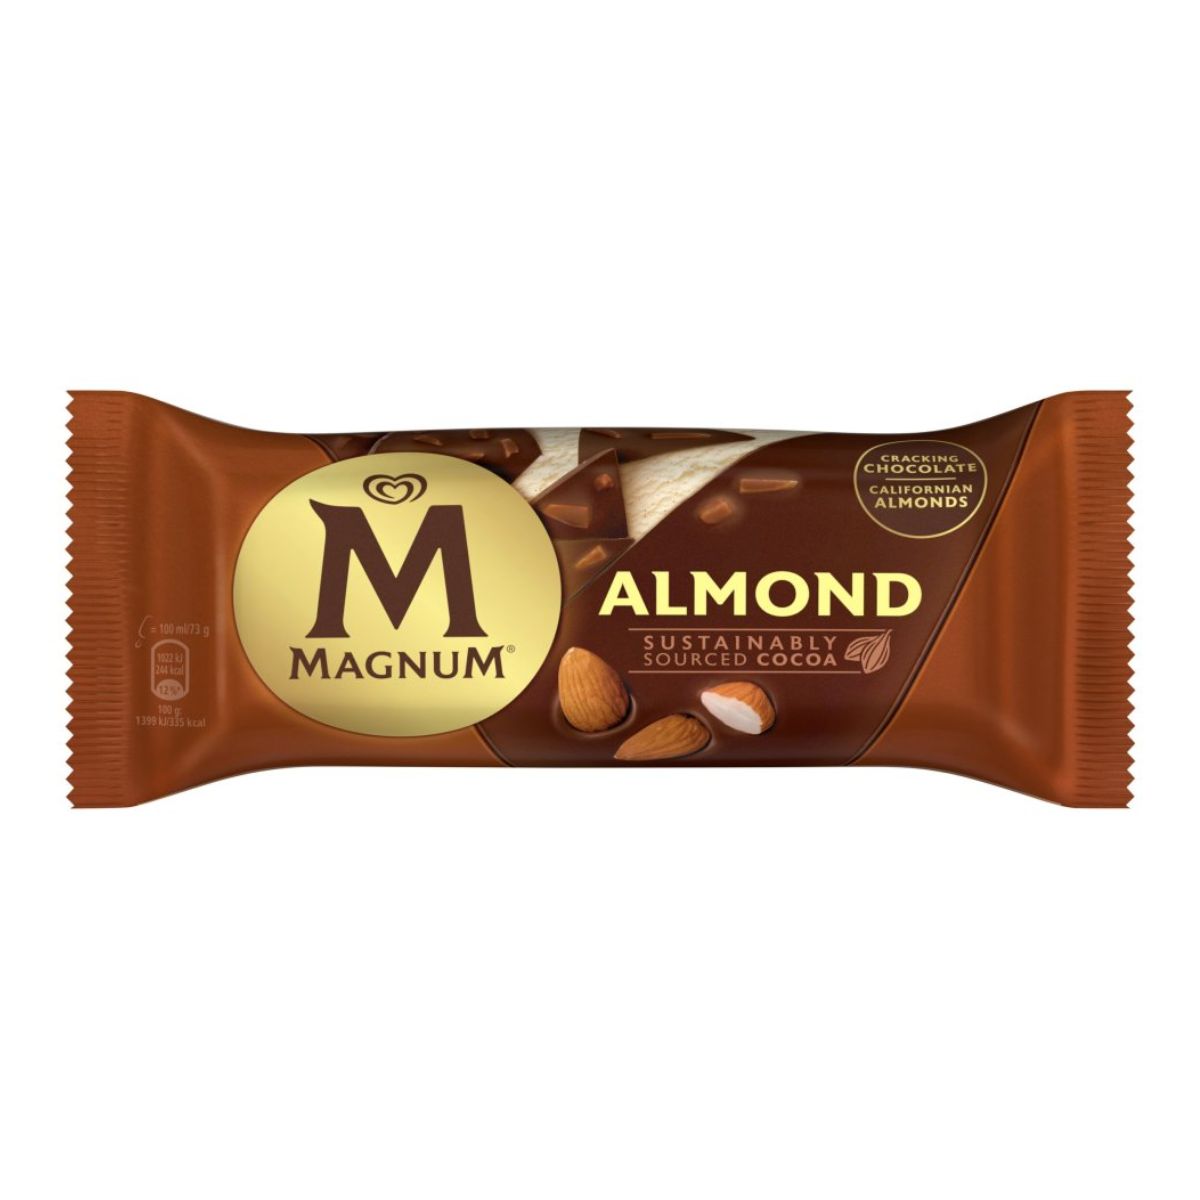 Magnum - Ice Cream Stick Almond - 73g almond chocolate bar.